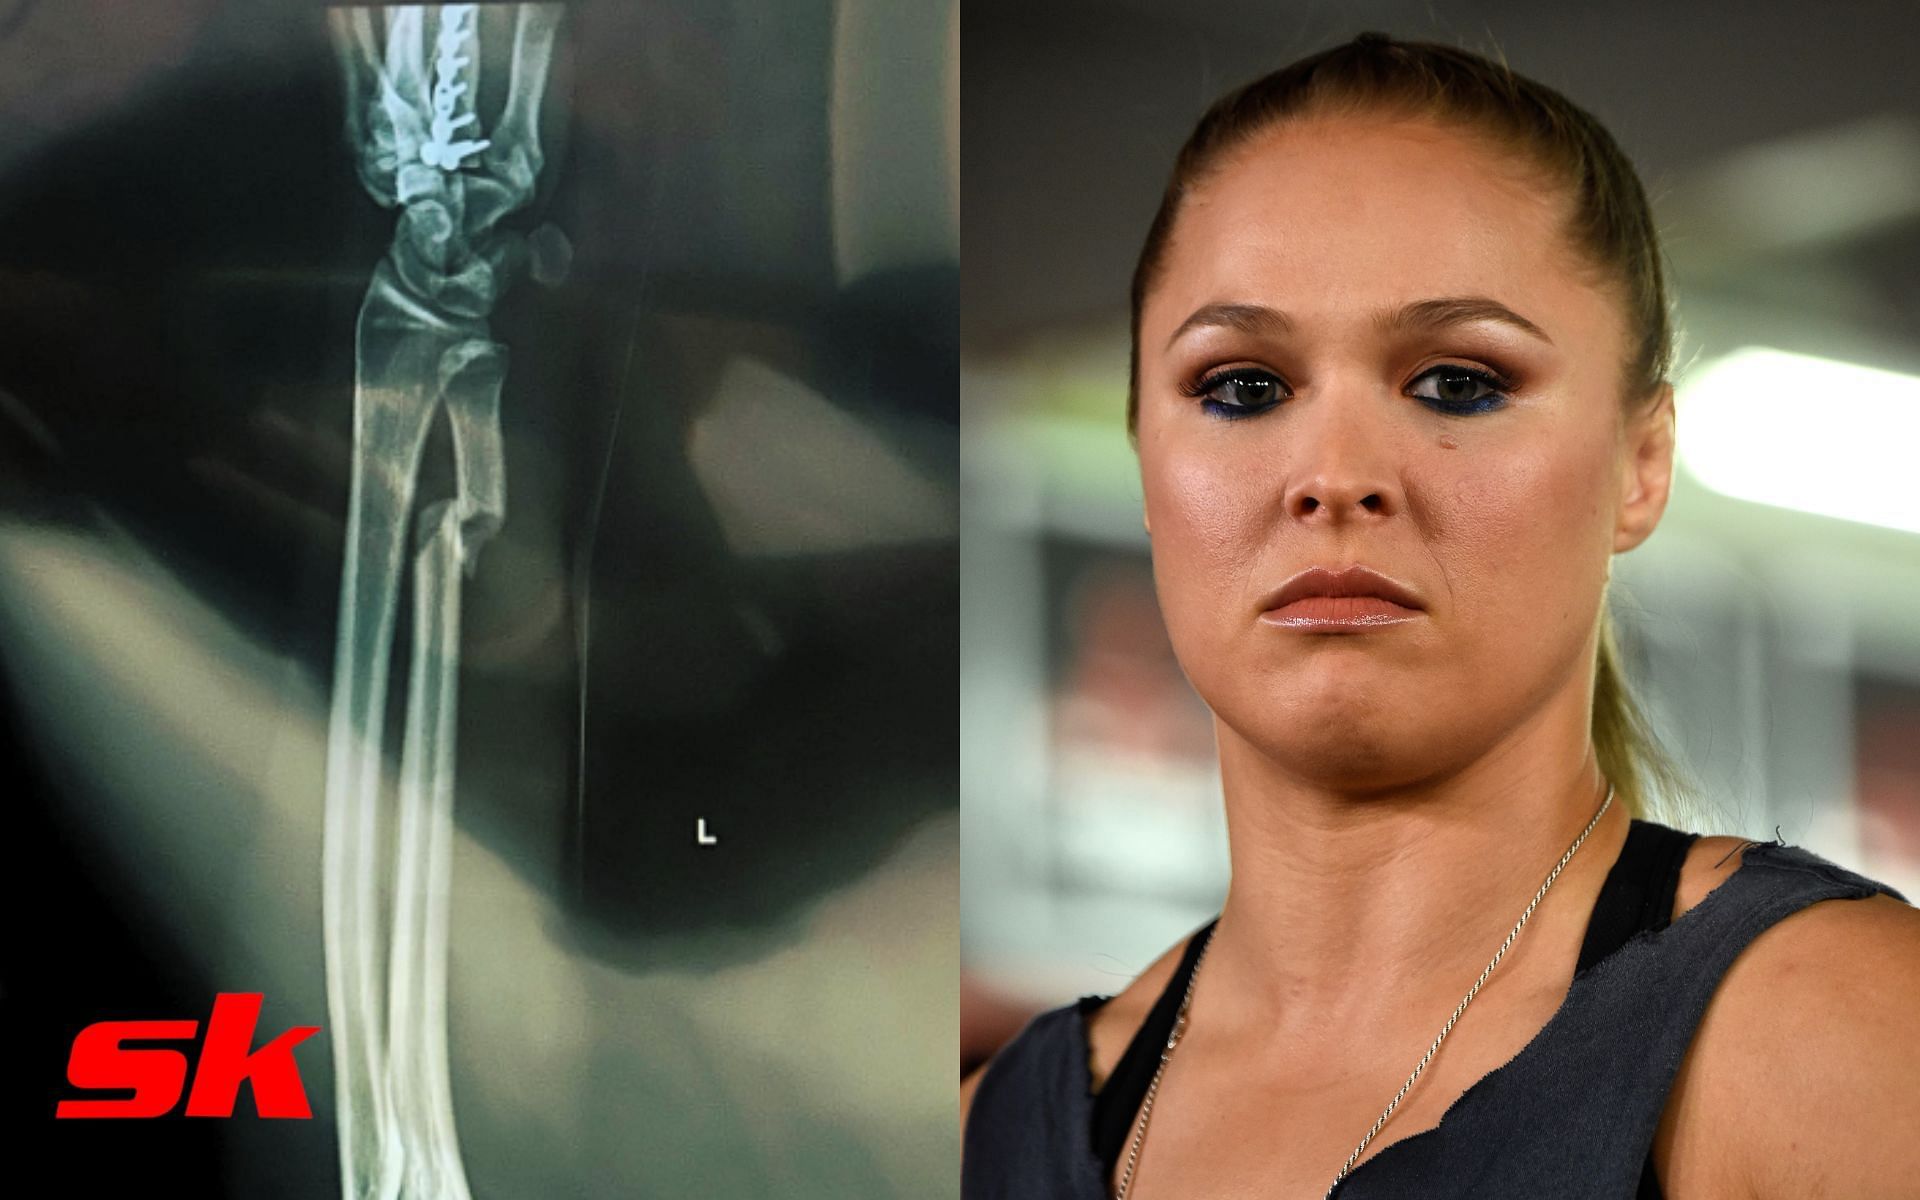 X-ray of broken bone (left - via Alex Caceres